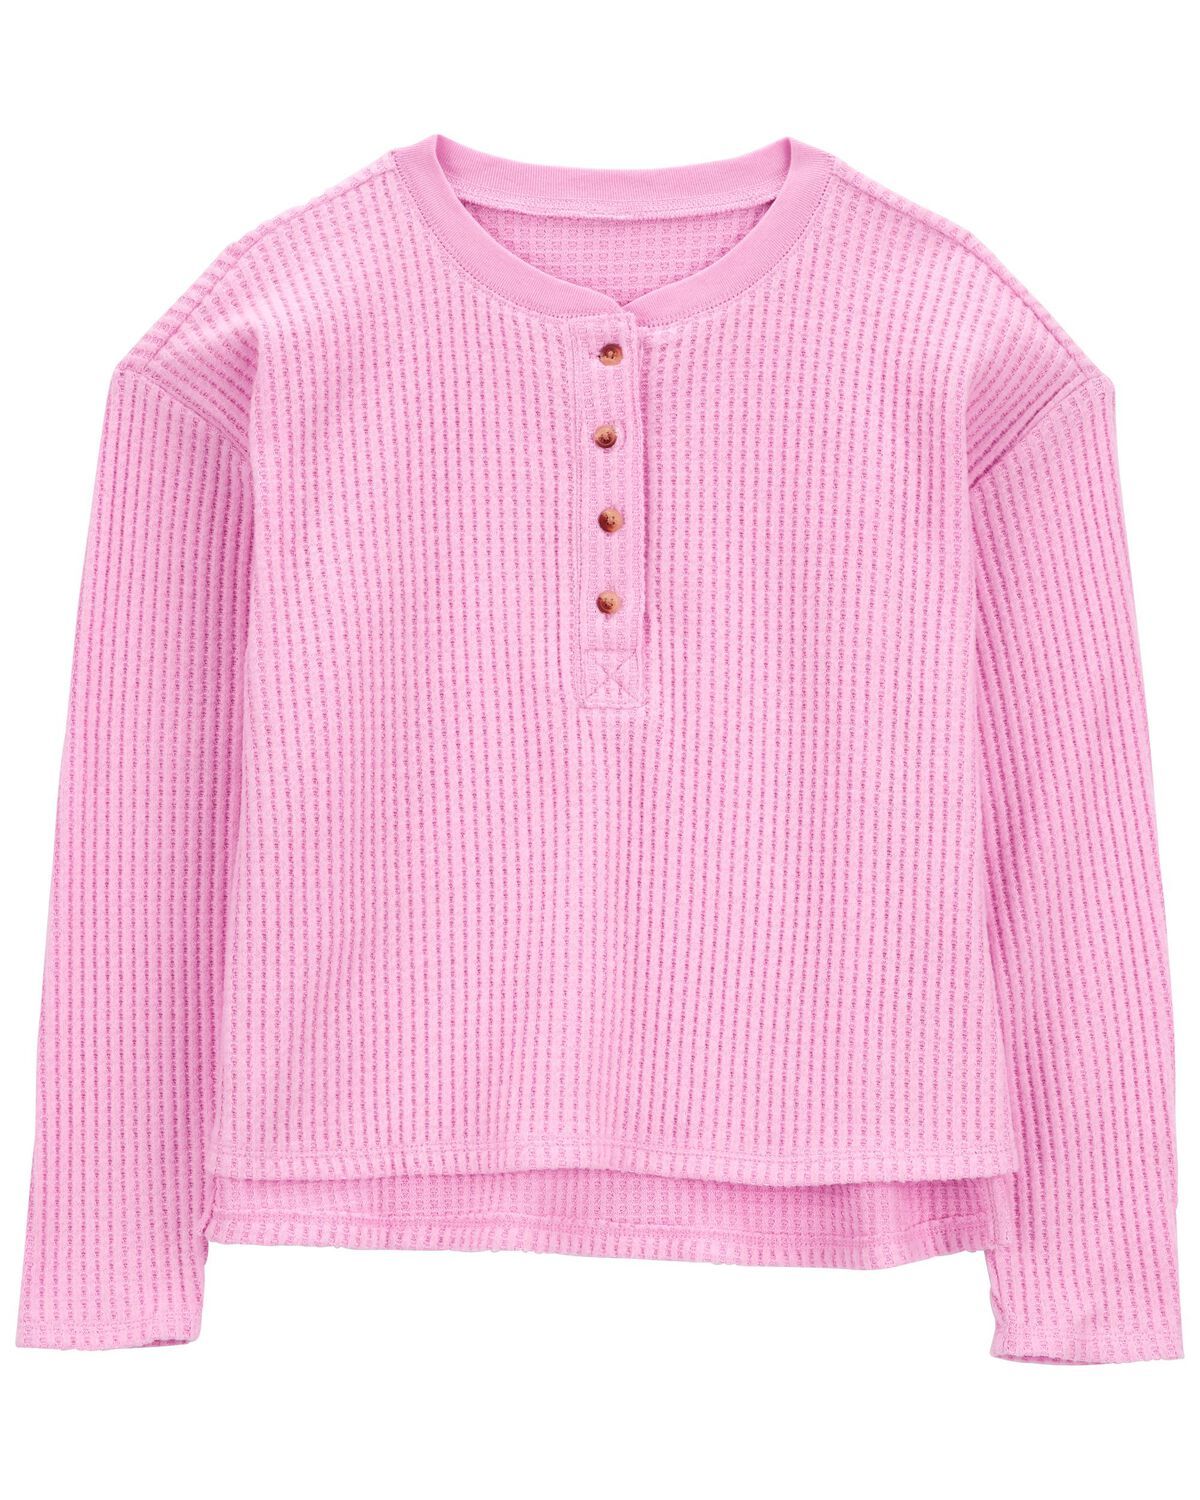 Pink Kid Waffle Knit High-Low Top
 | carters.com | Carter's